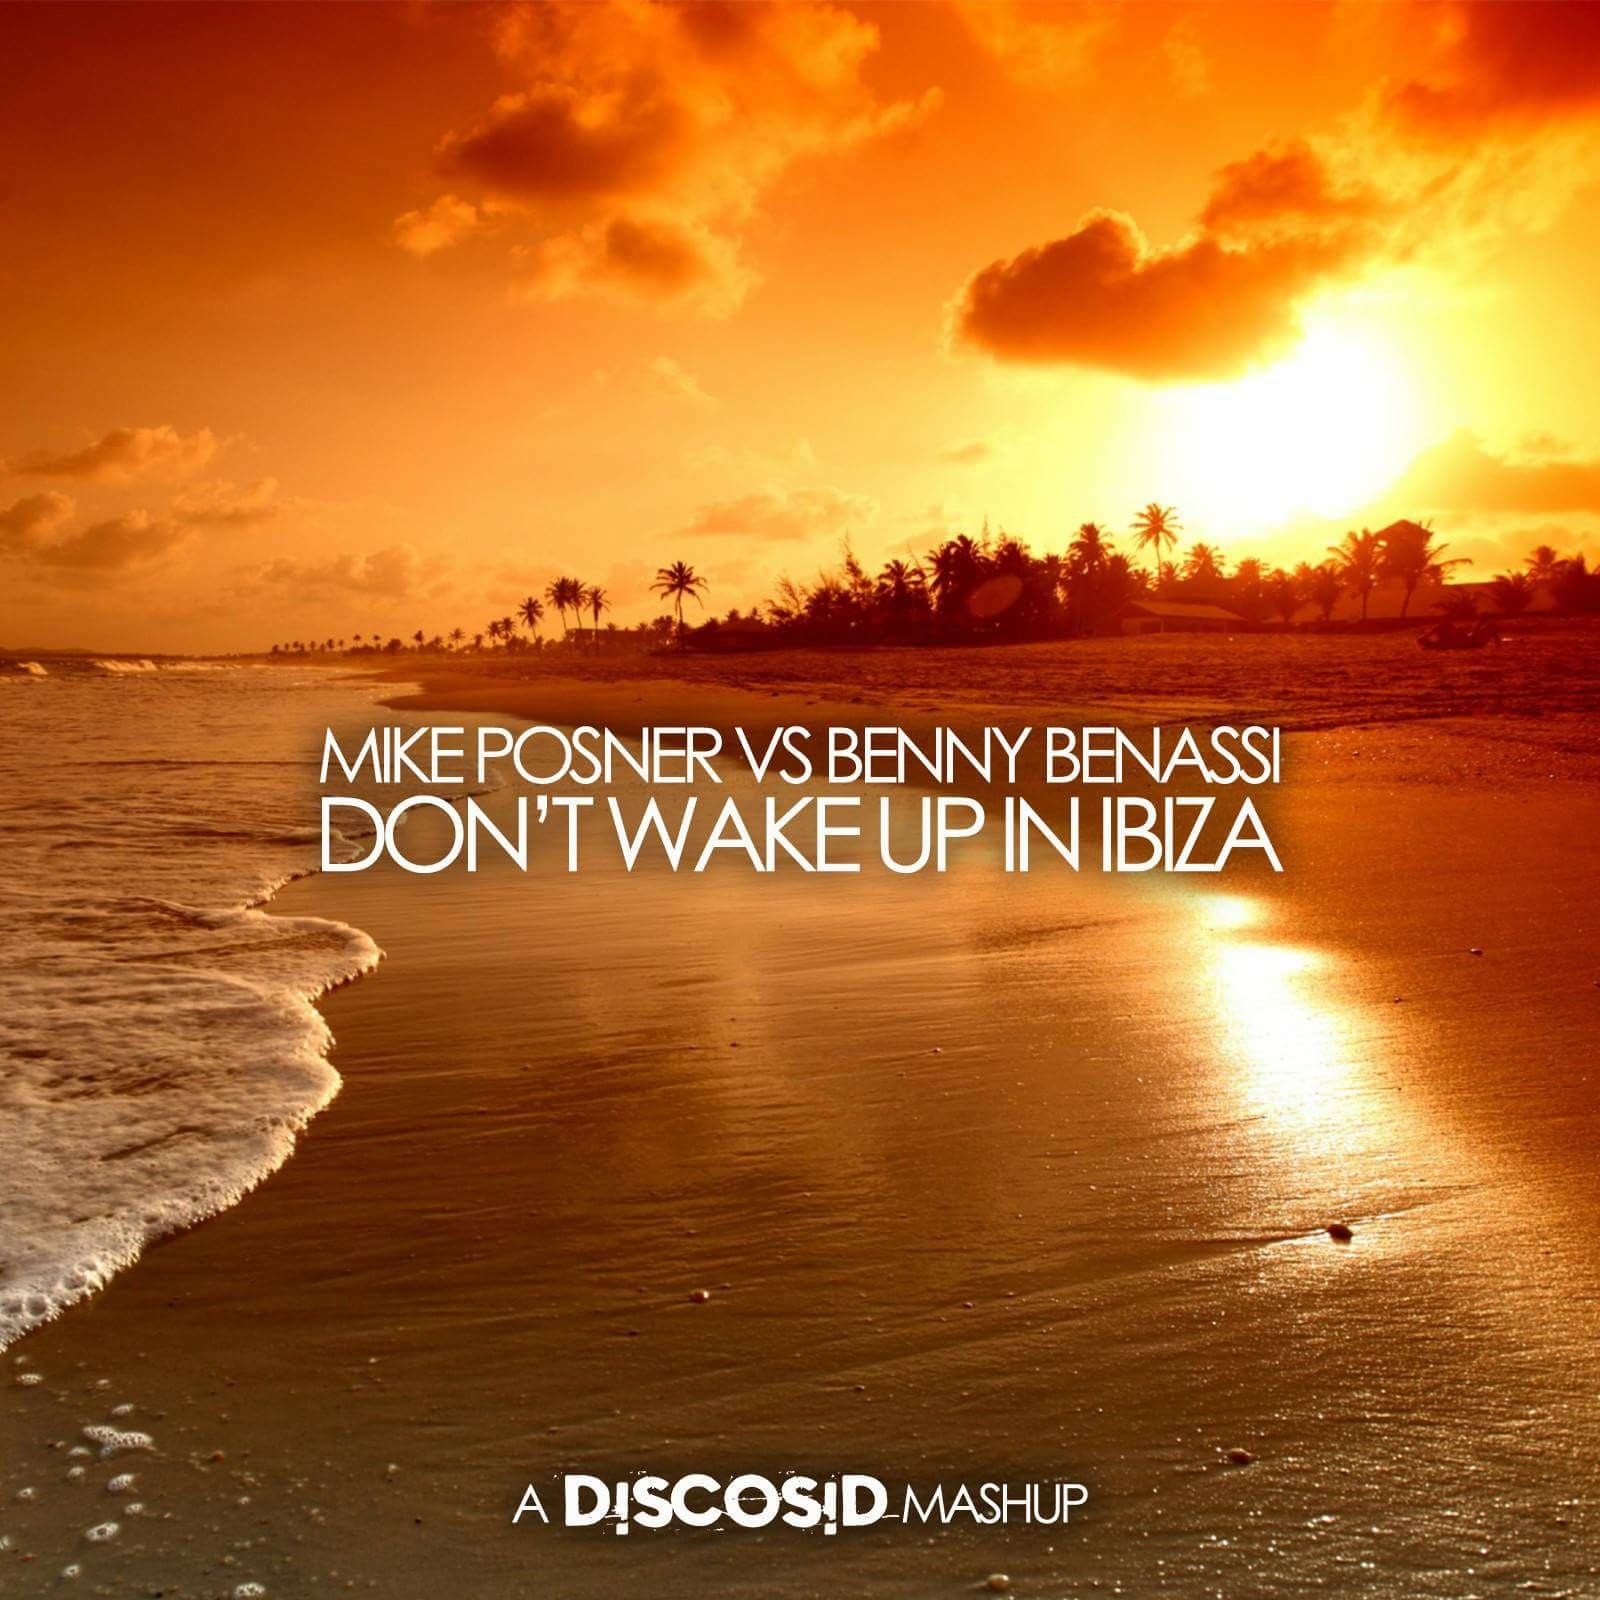 Mike Posner Vs Benny Benassi - Don't Wake Up In Ibiza (Discosid Mashup)